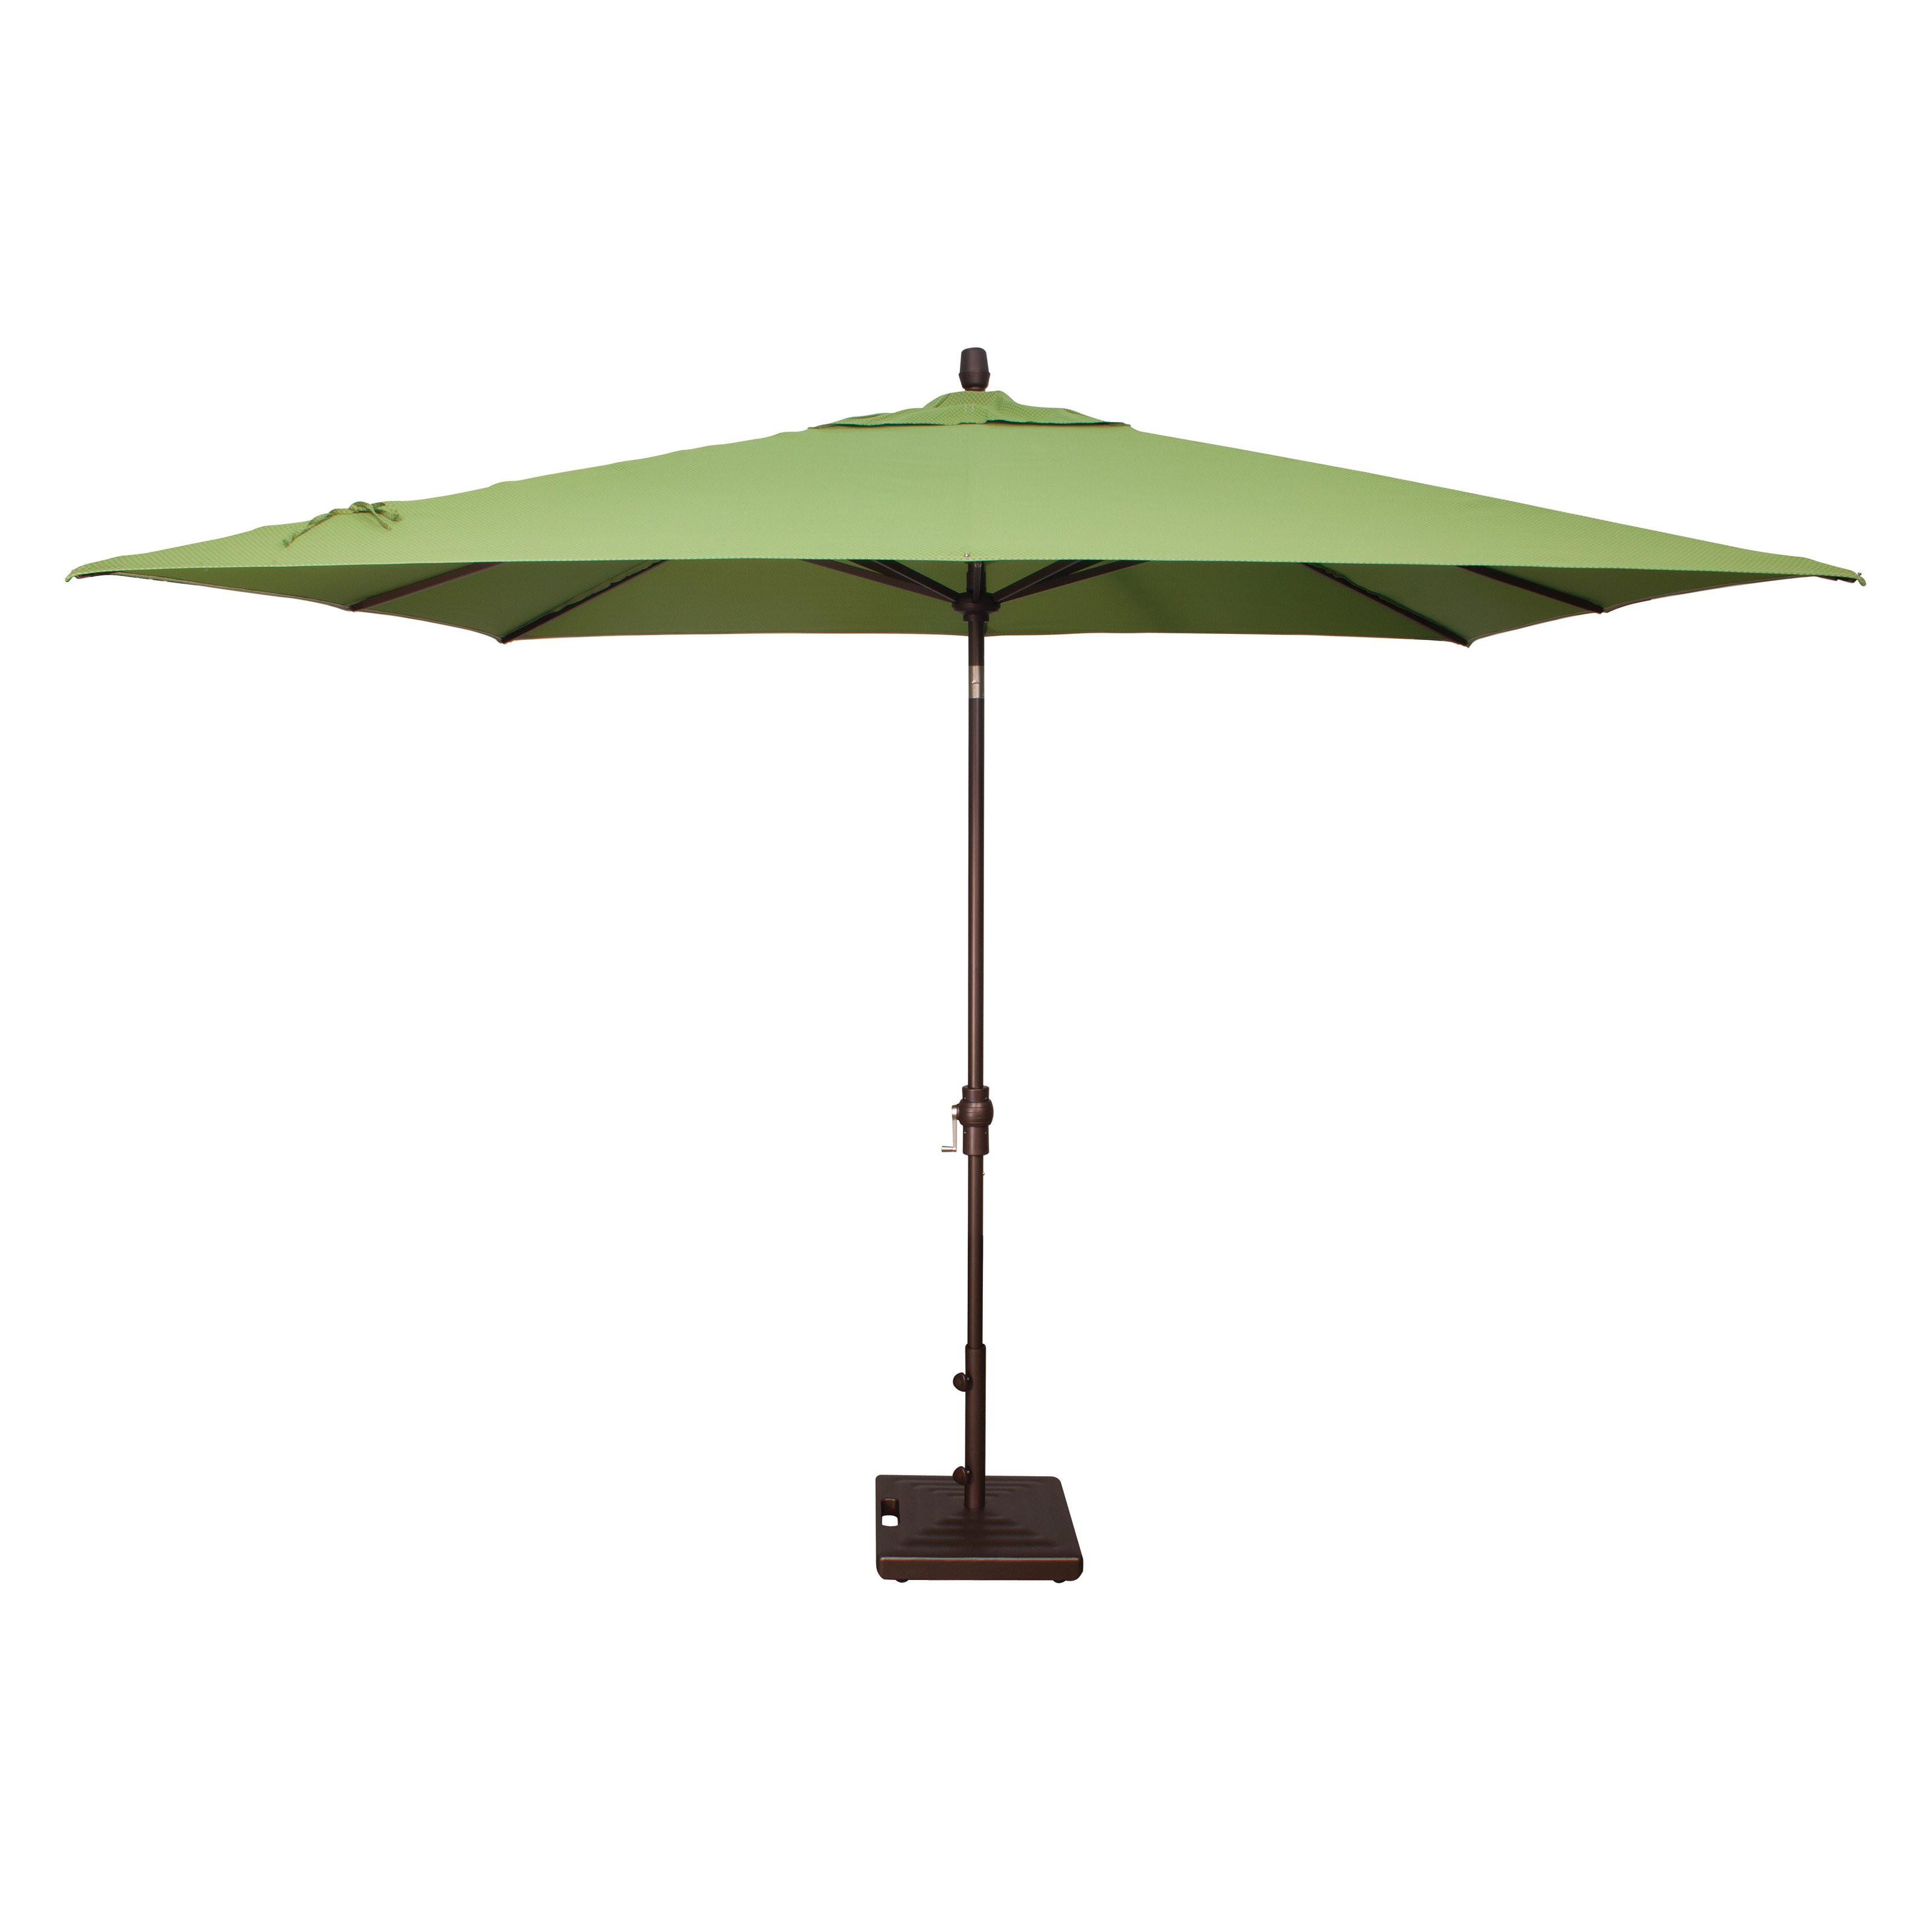 Best ideas about Amazon Patio Umbrella
. Save or Pin Treasure Garden X Ft Sunbrella Aluminium Auto Tilt Patio Now.